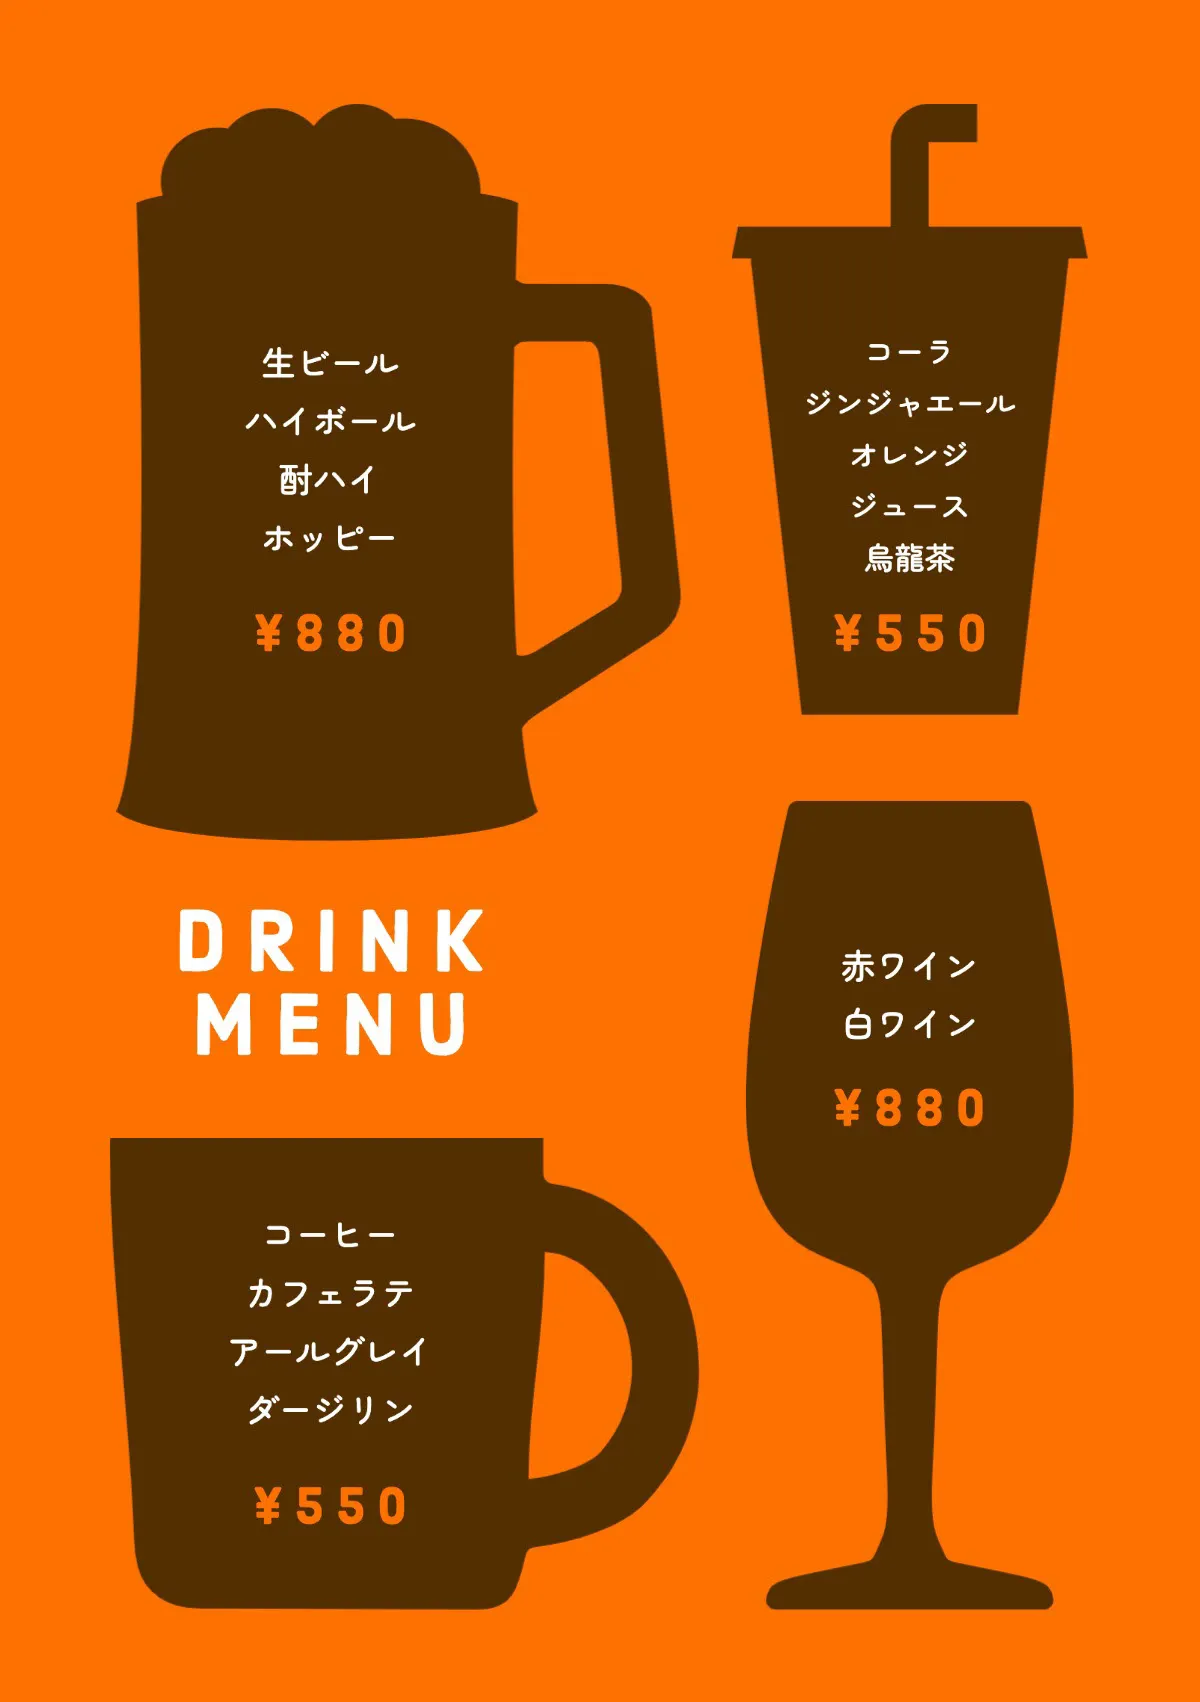 Creative drink menu